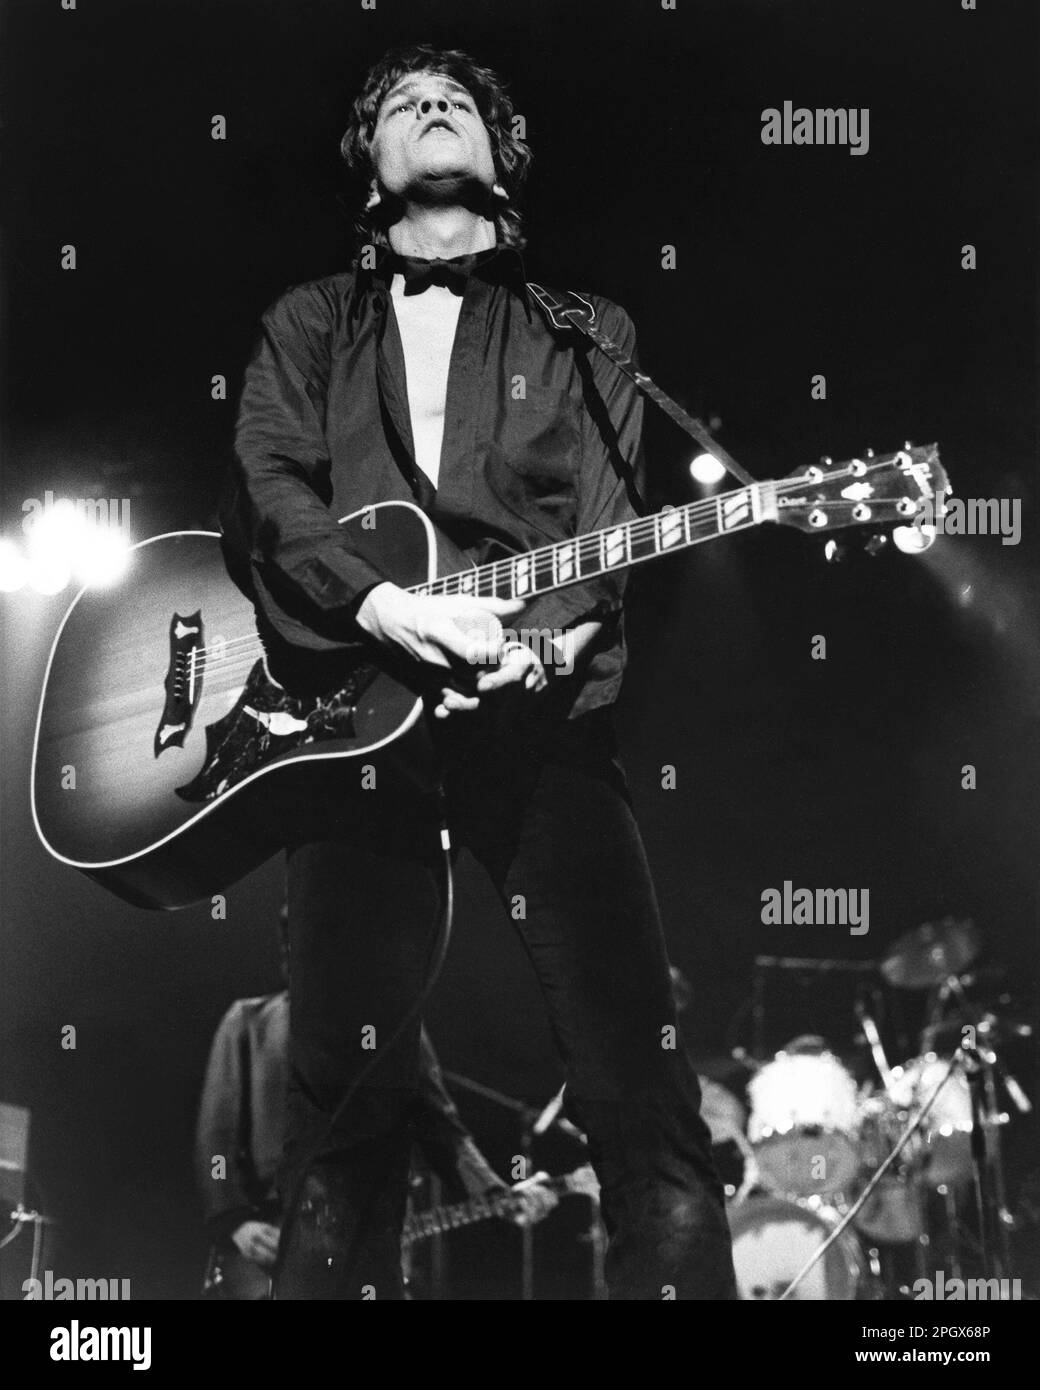 David Johansen, formerly of the New York Dolls, performing at the Palladium in New York City, NY, February 16, 1979. Stock Photo